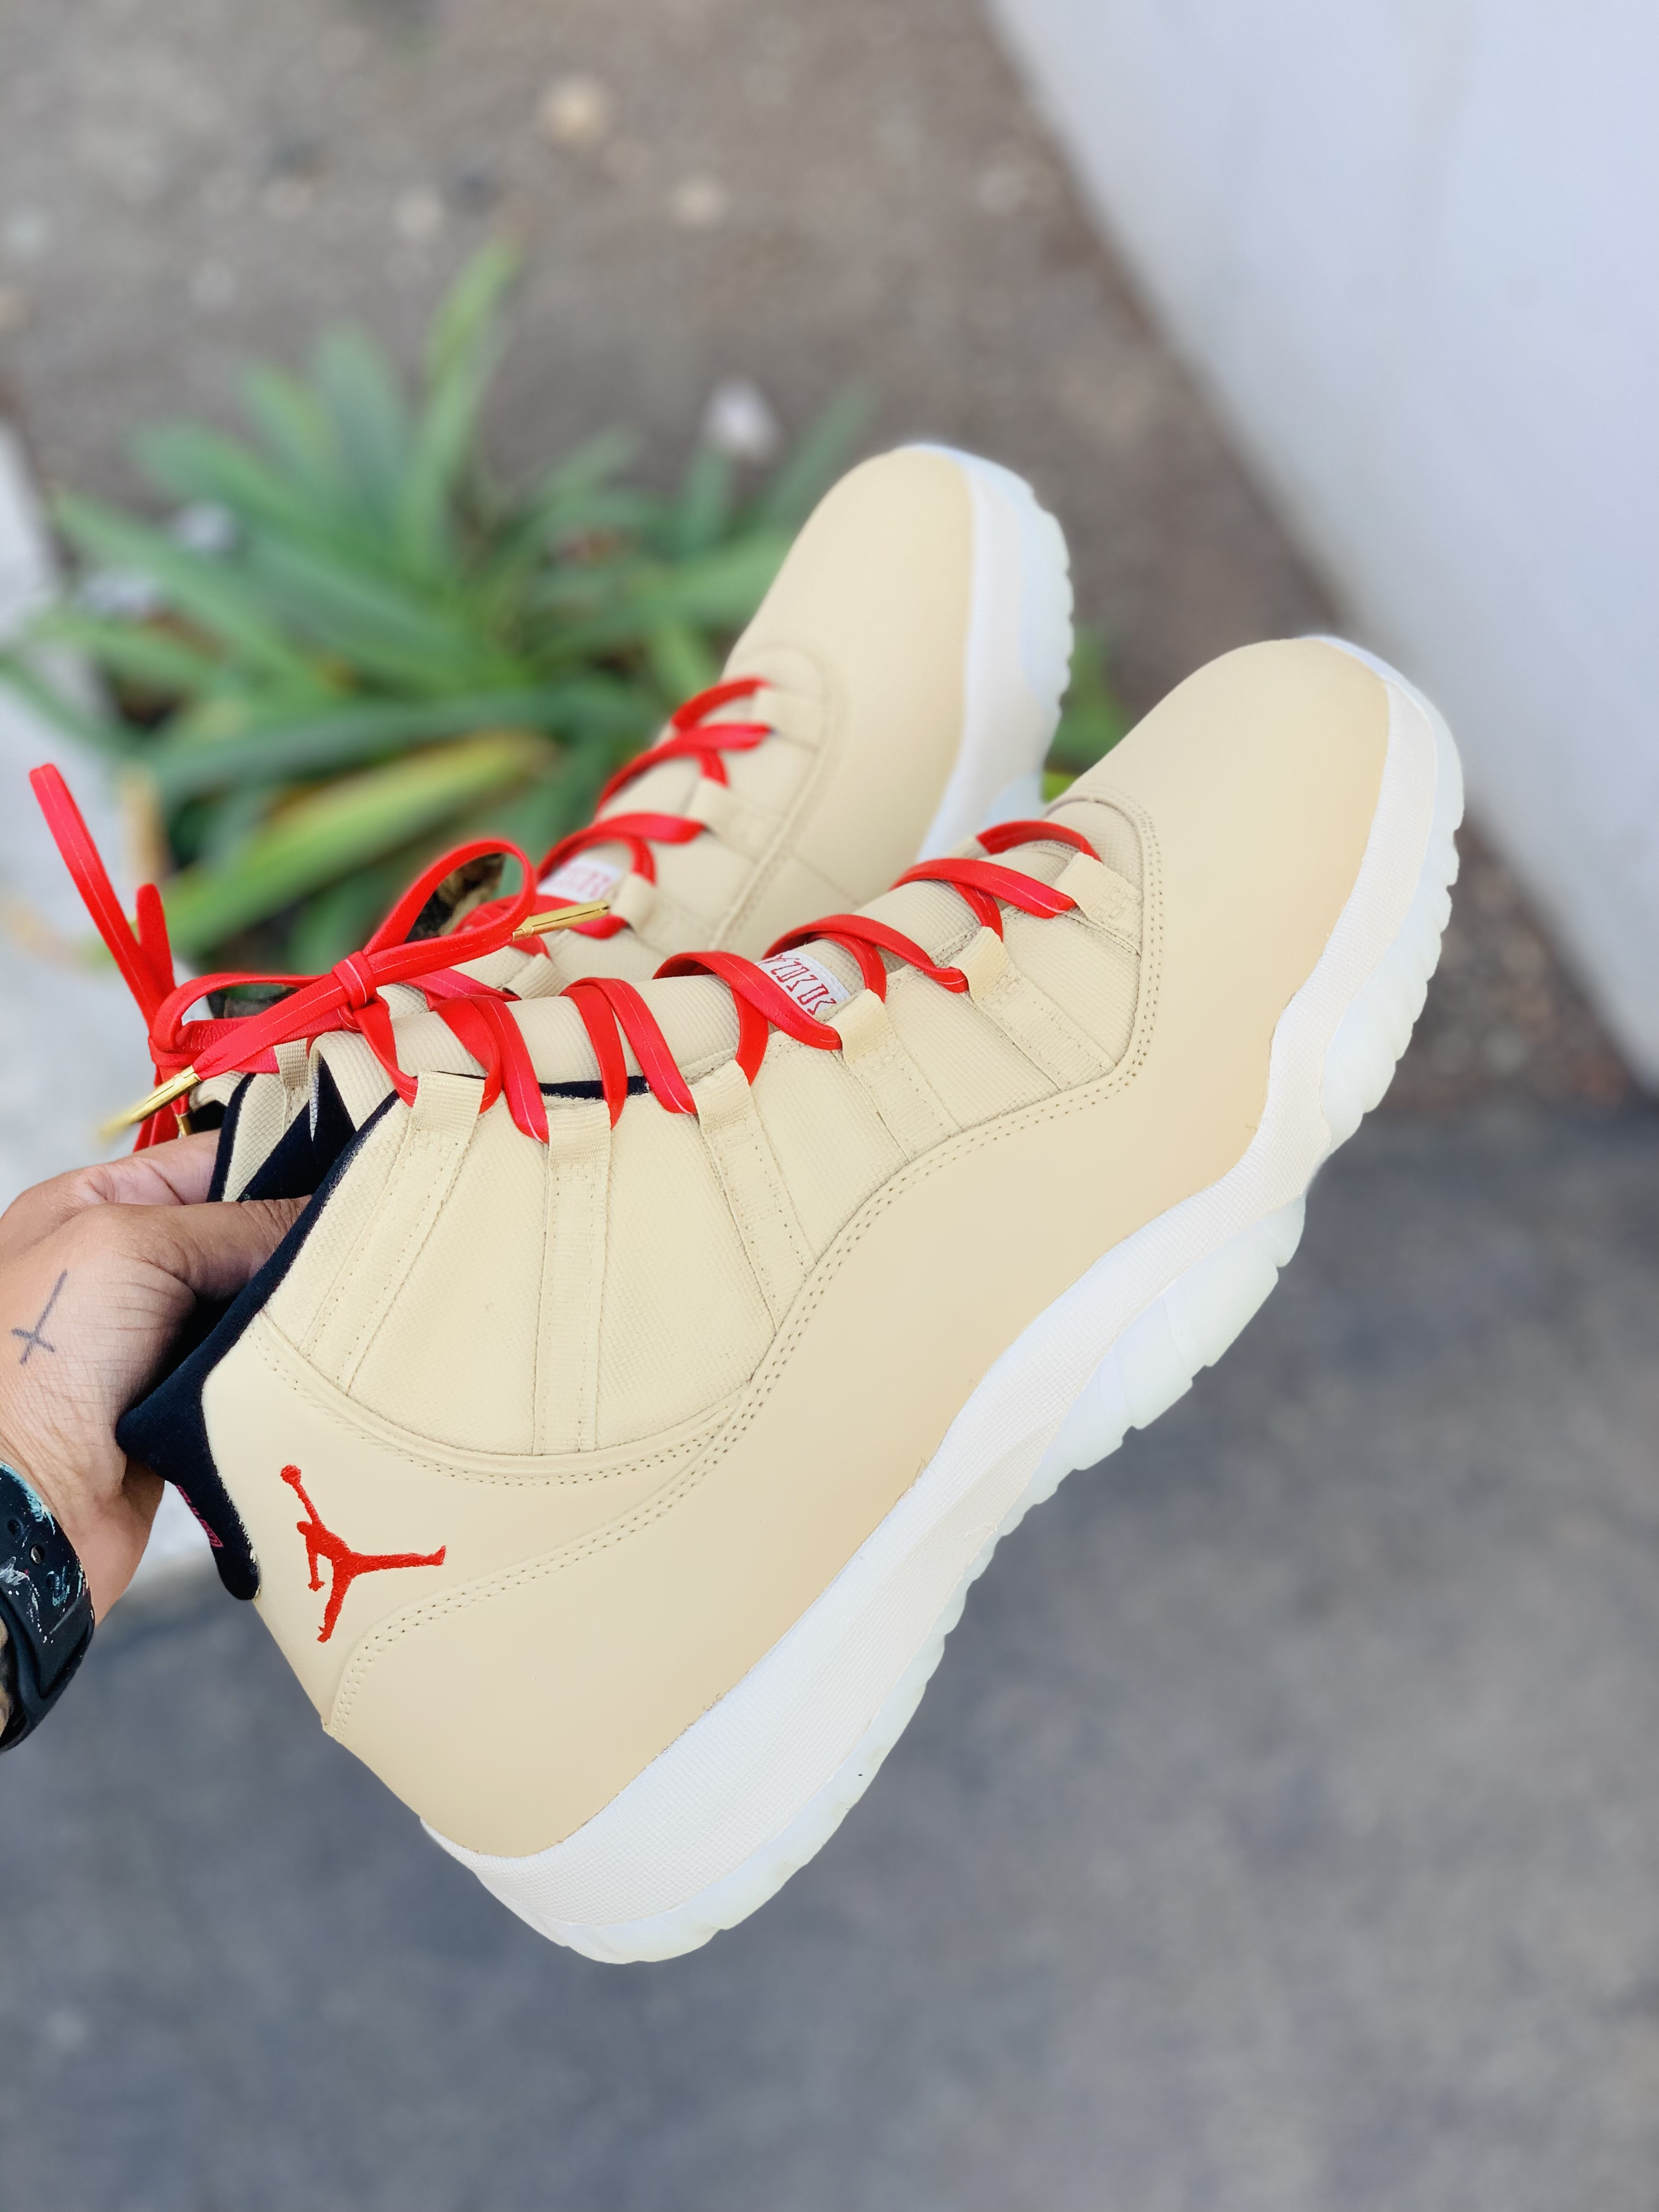 Katty Customs - Rate these custom Jordan 11s 1-10 🤔 KattyCustoms.com ♥️  #kattycustoms #kattylenoir #kattyfornia #angelusdirect #lacelab #nike # jordan #jordan11 #customshoes #stockx #kickfeed #goat #luxuary #sneakers  #sneakerheads #